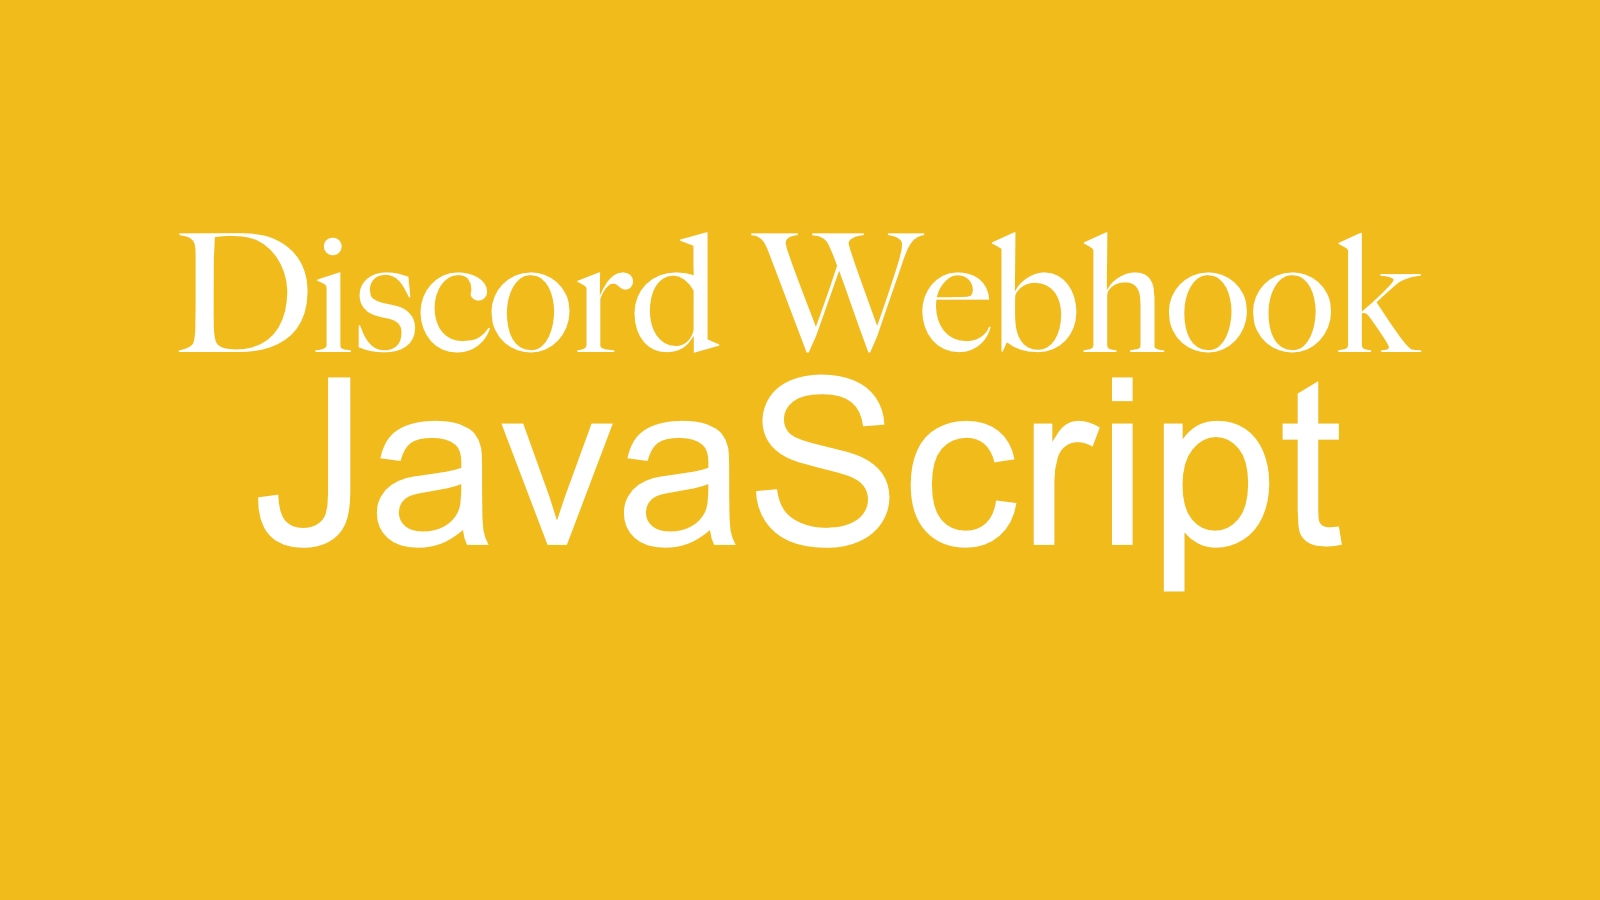 Create a Discord Webhook in JavaScript